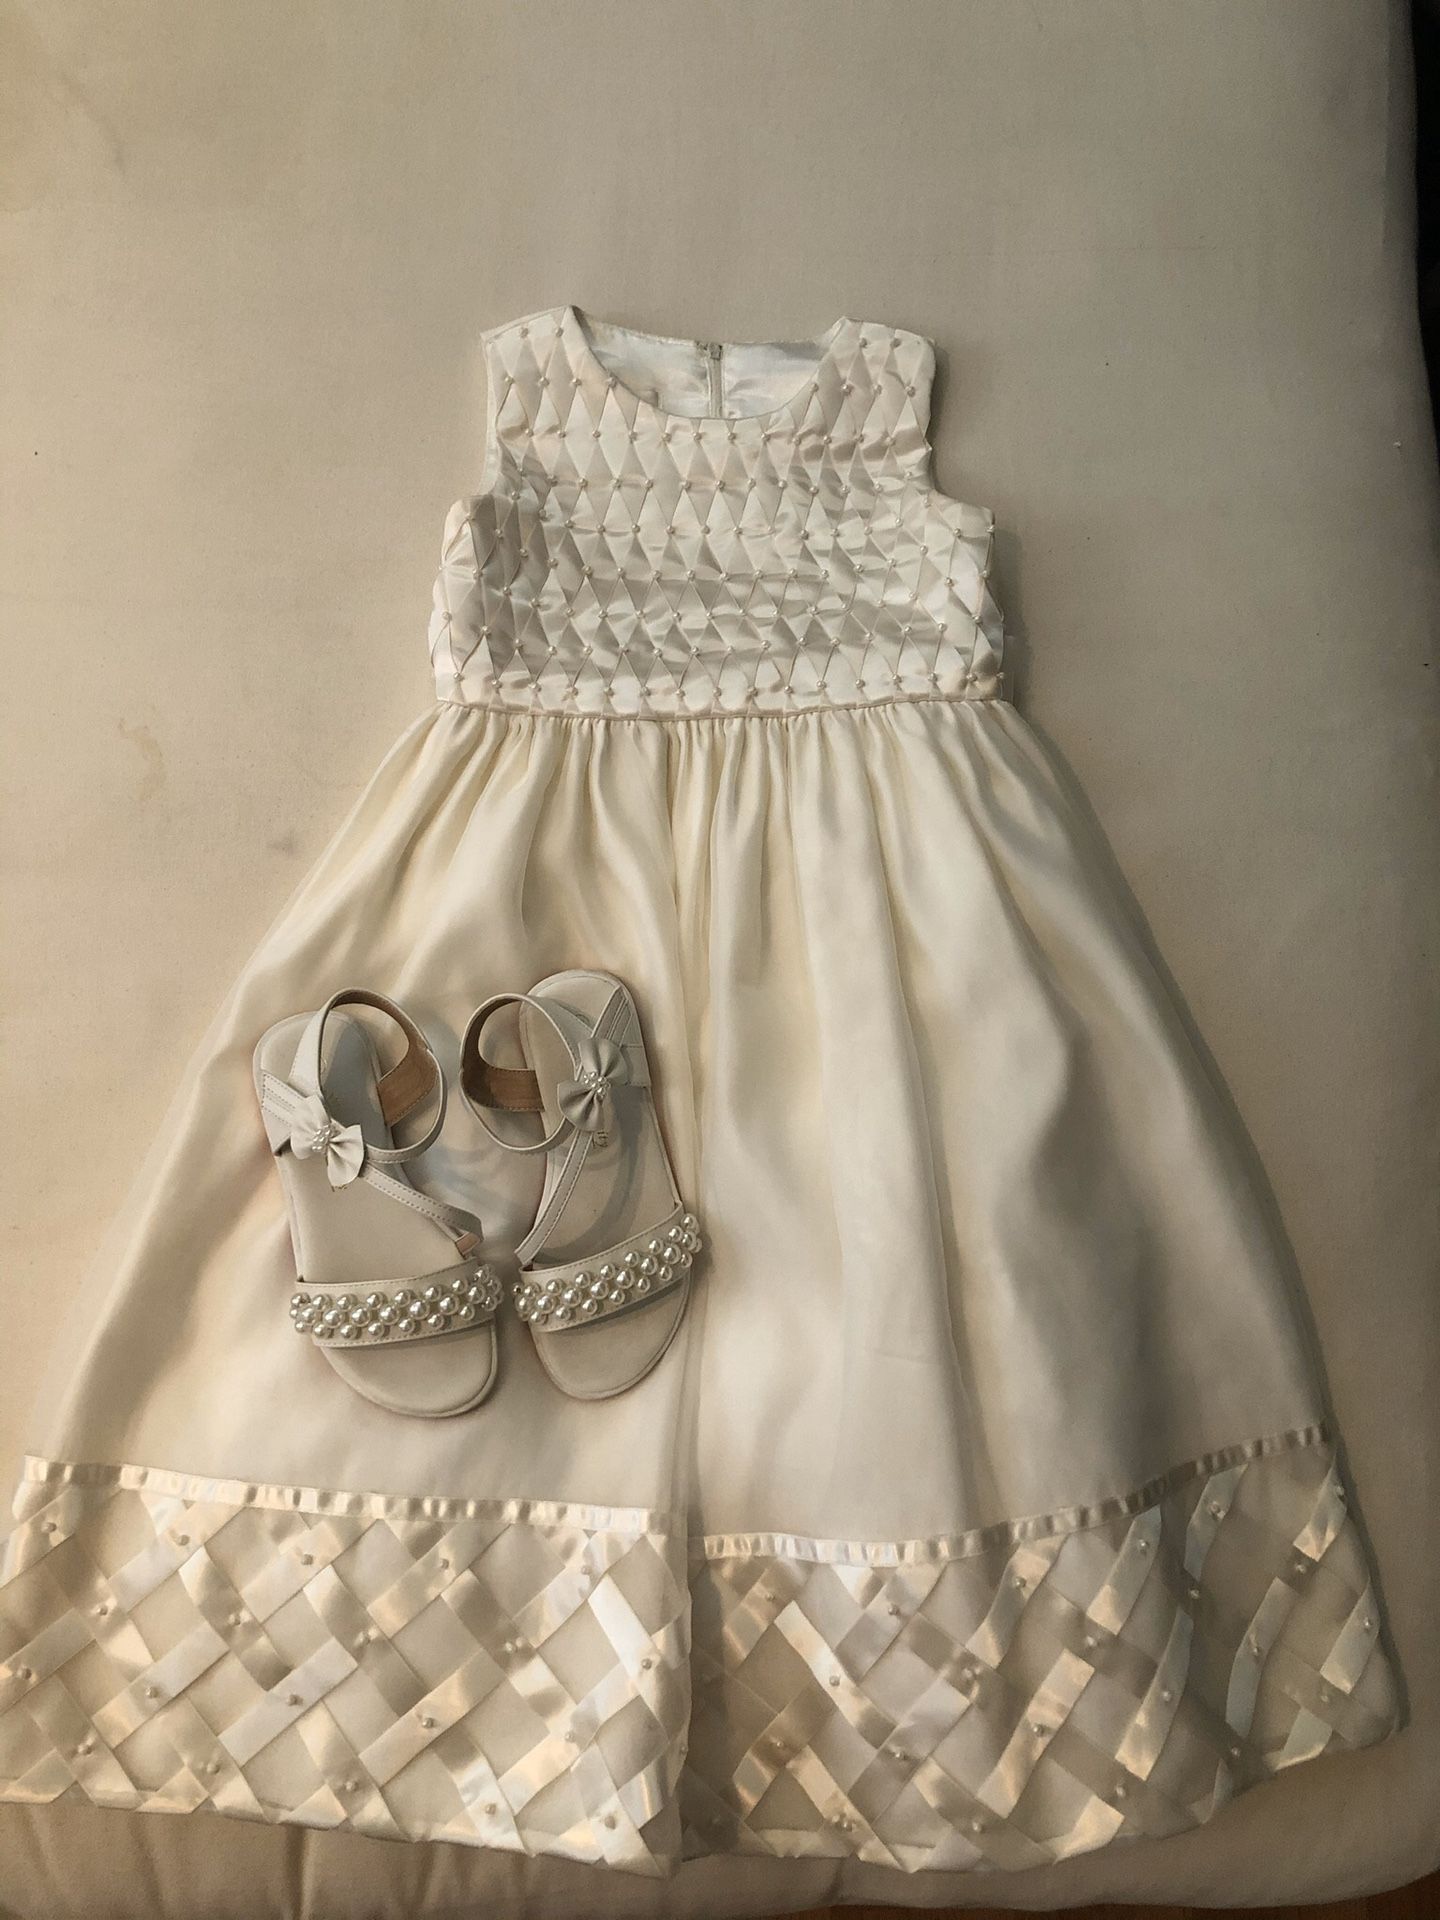 Cinderella dress size 6 